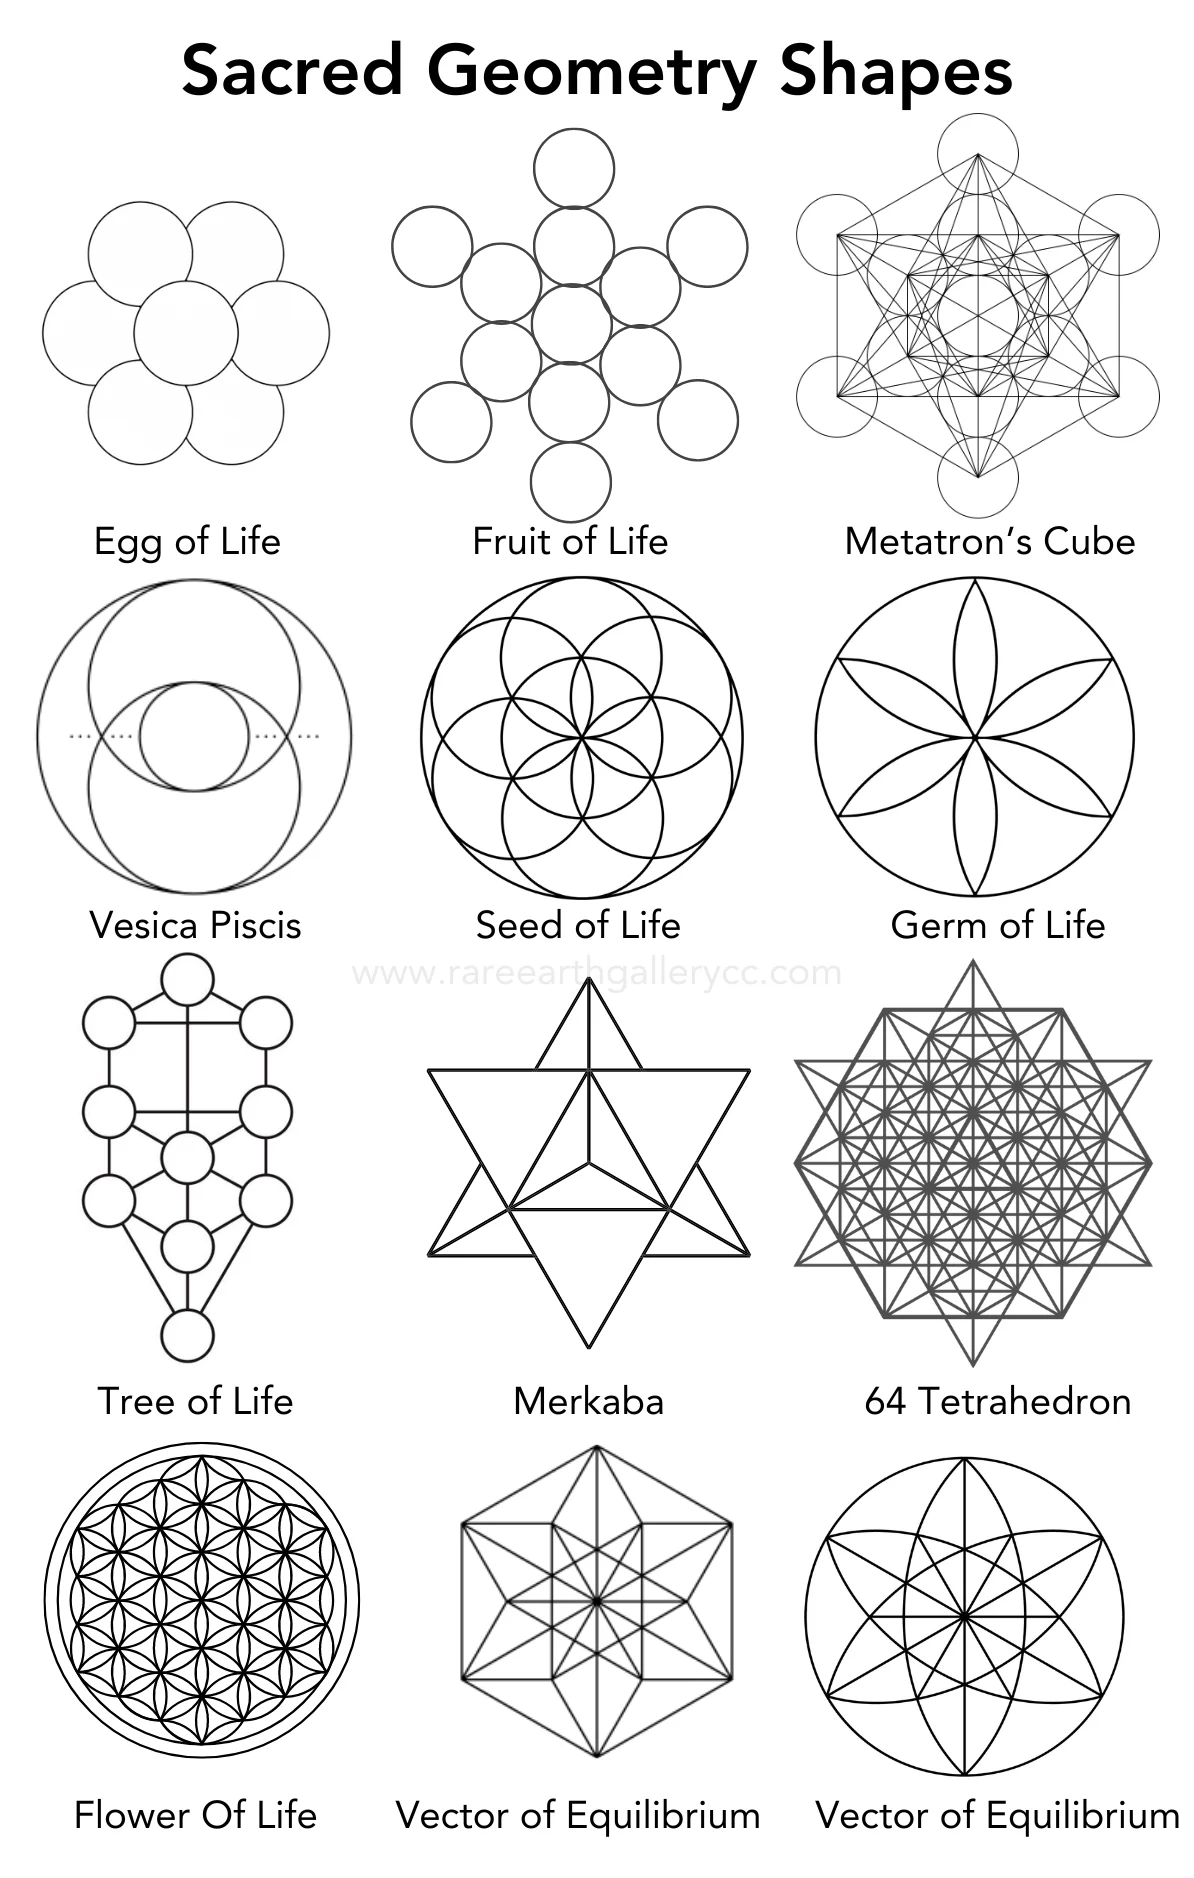 Image of Sacred Geometry Shapes